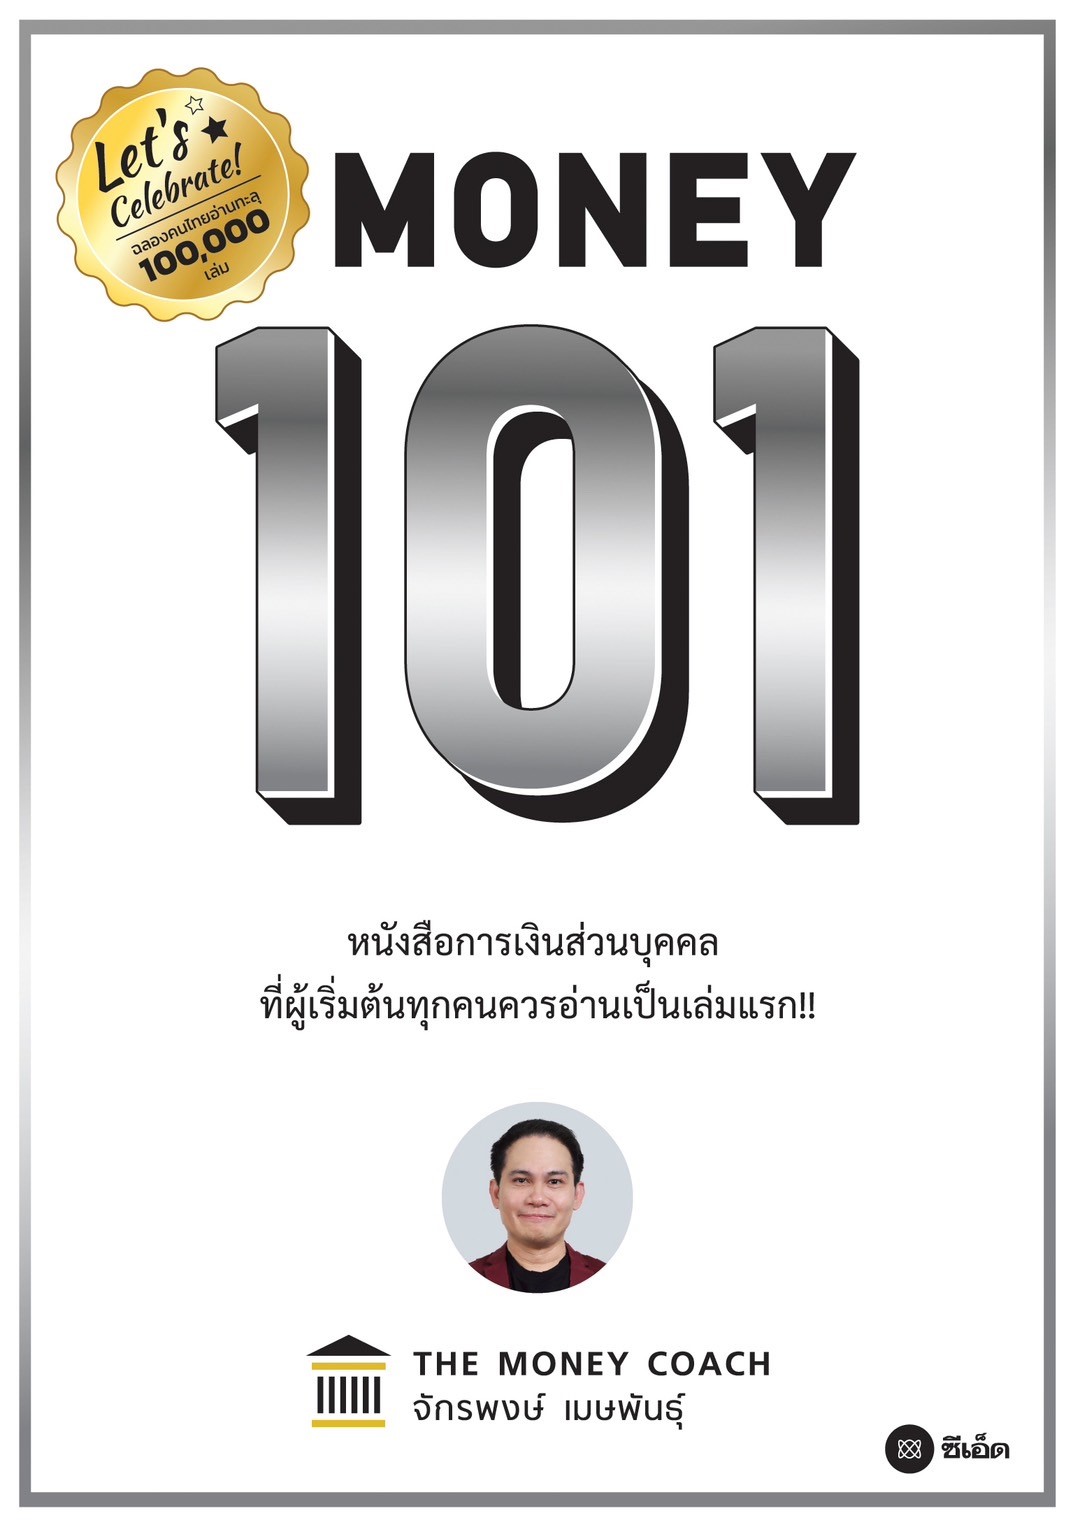 MONEY 101 เริ่มต้นนับหนึ่งสู่ชีวิตการเงินอุดมสุข (ปกแข็ง) 